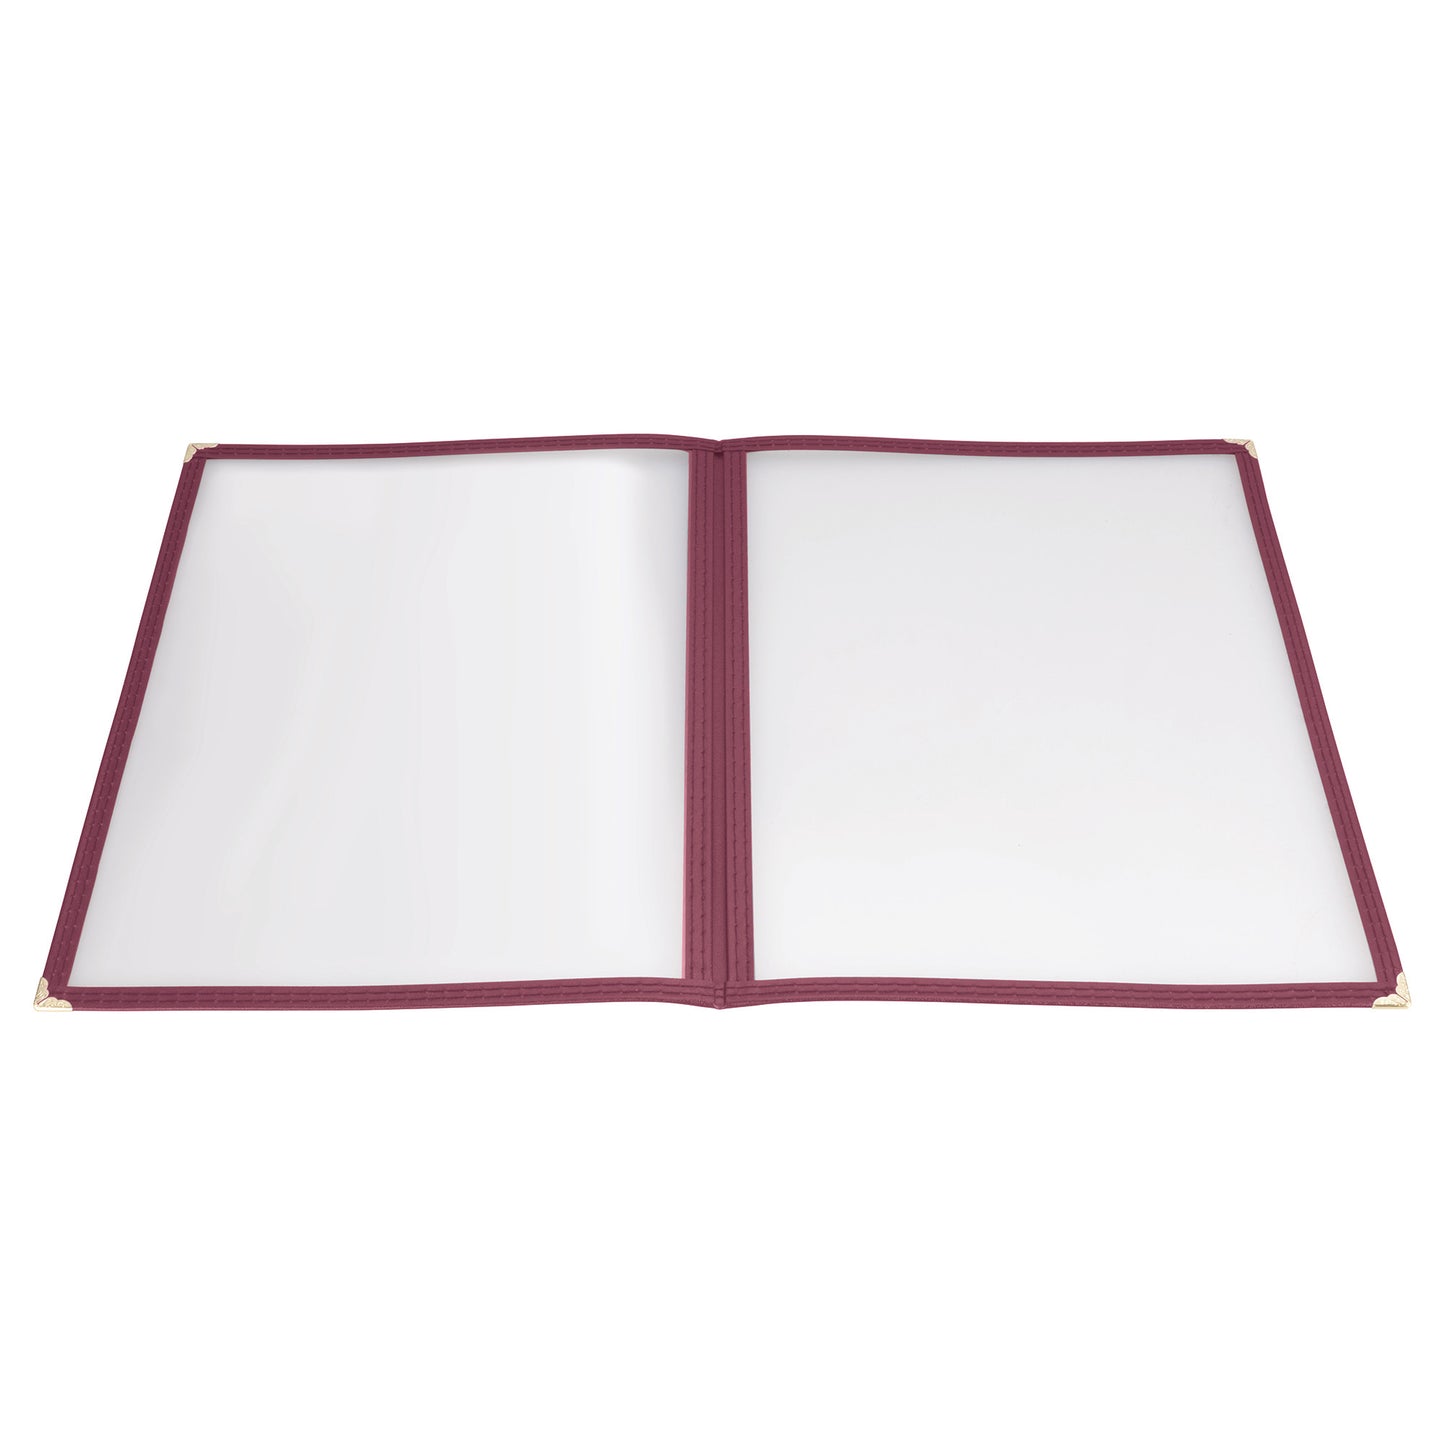 Book-Fold Double Panel Menu Cover - Burgundy, 9-9/16 x 15